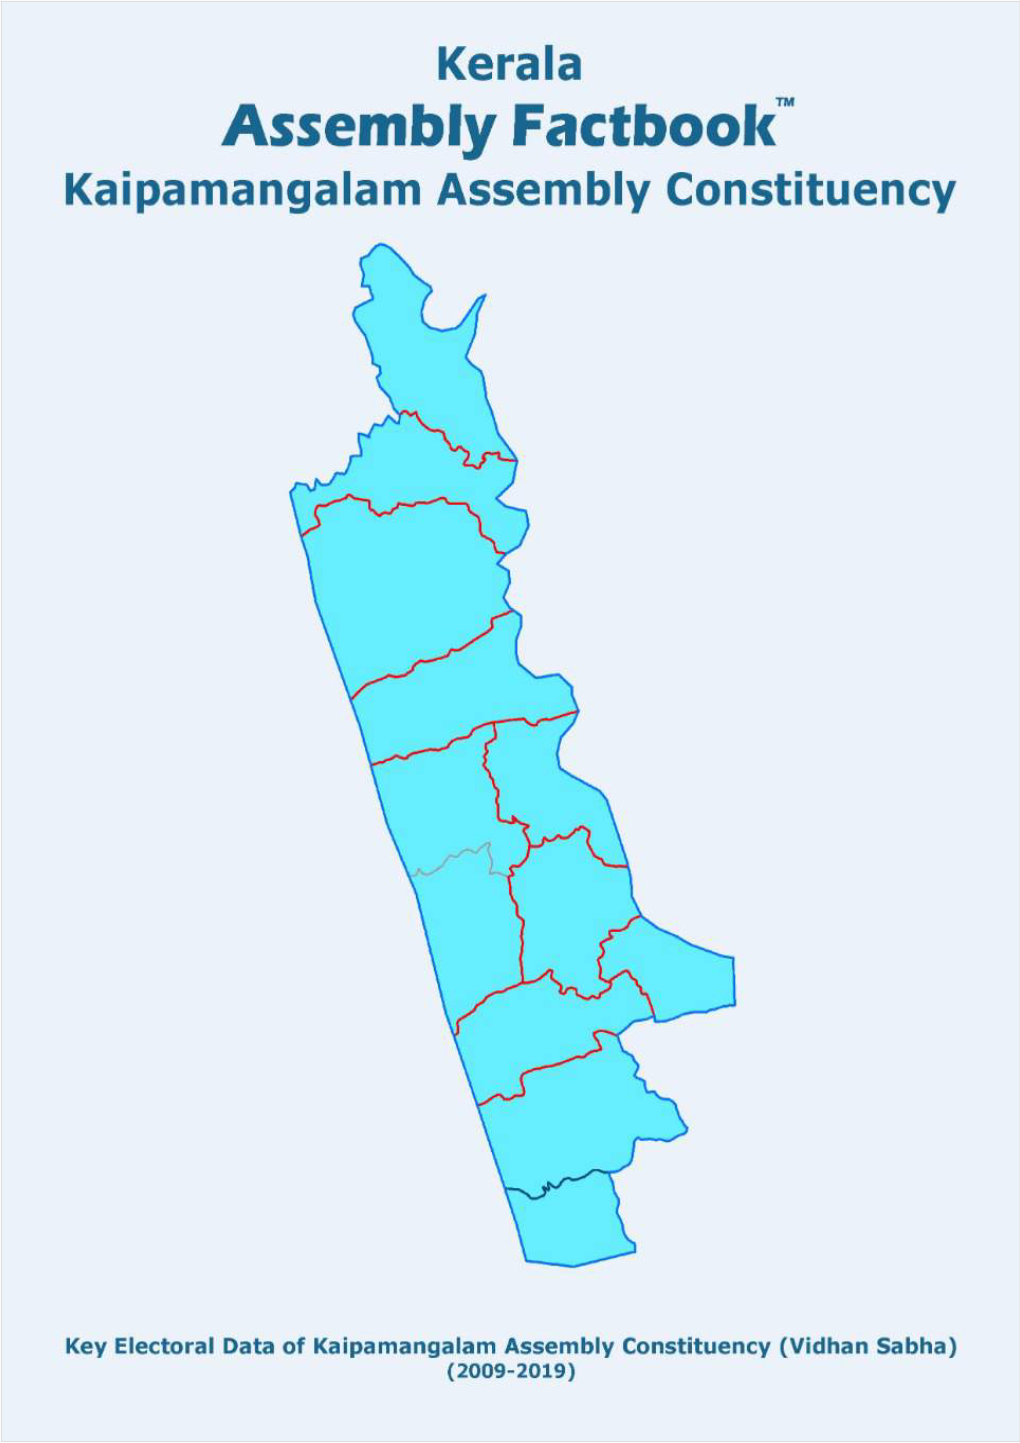 Kaipamangalam Assembly Kerala Factbook